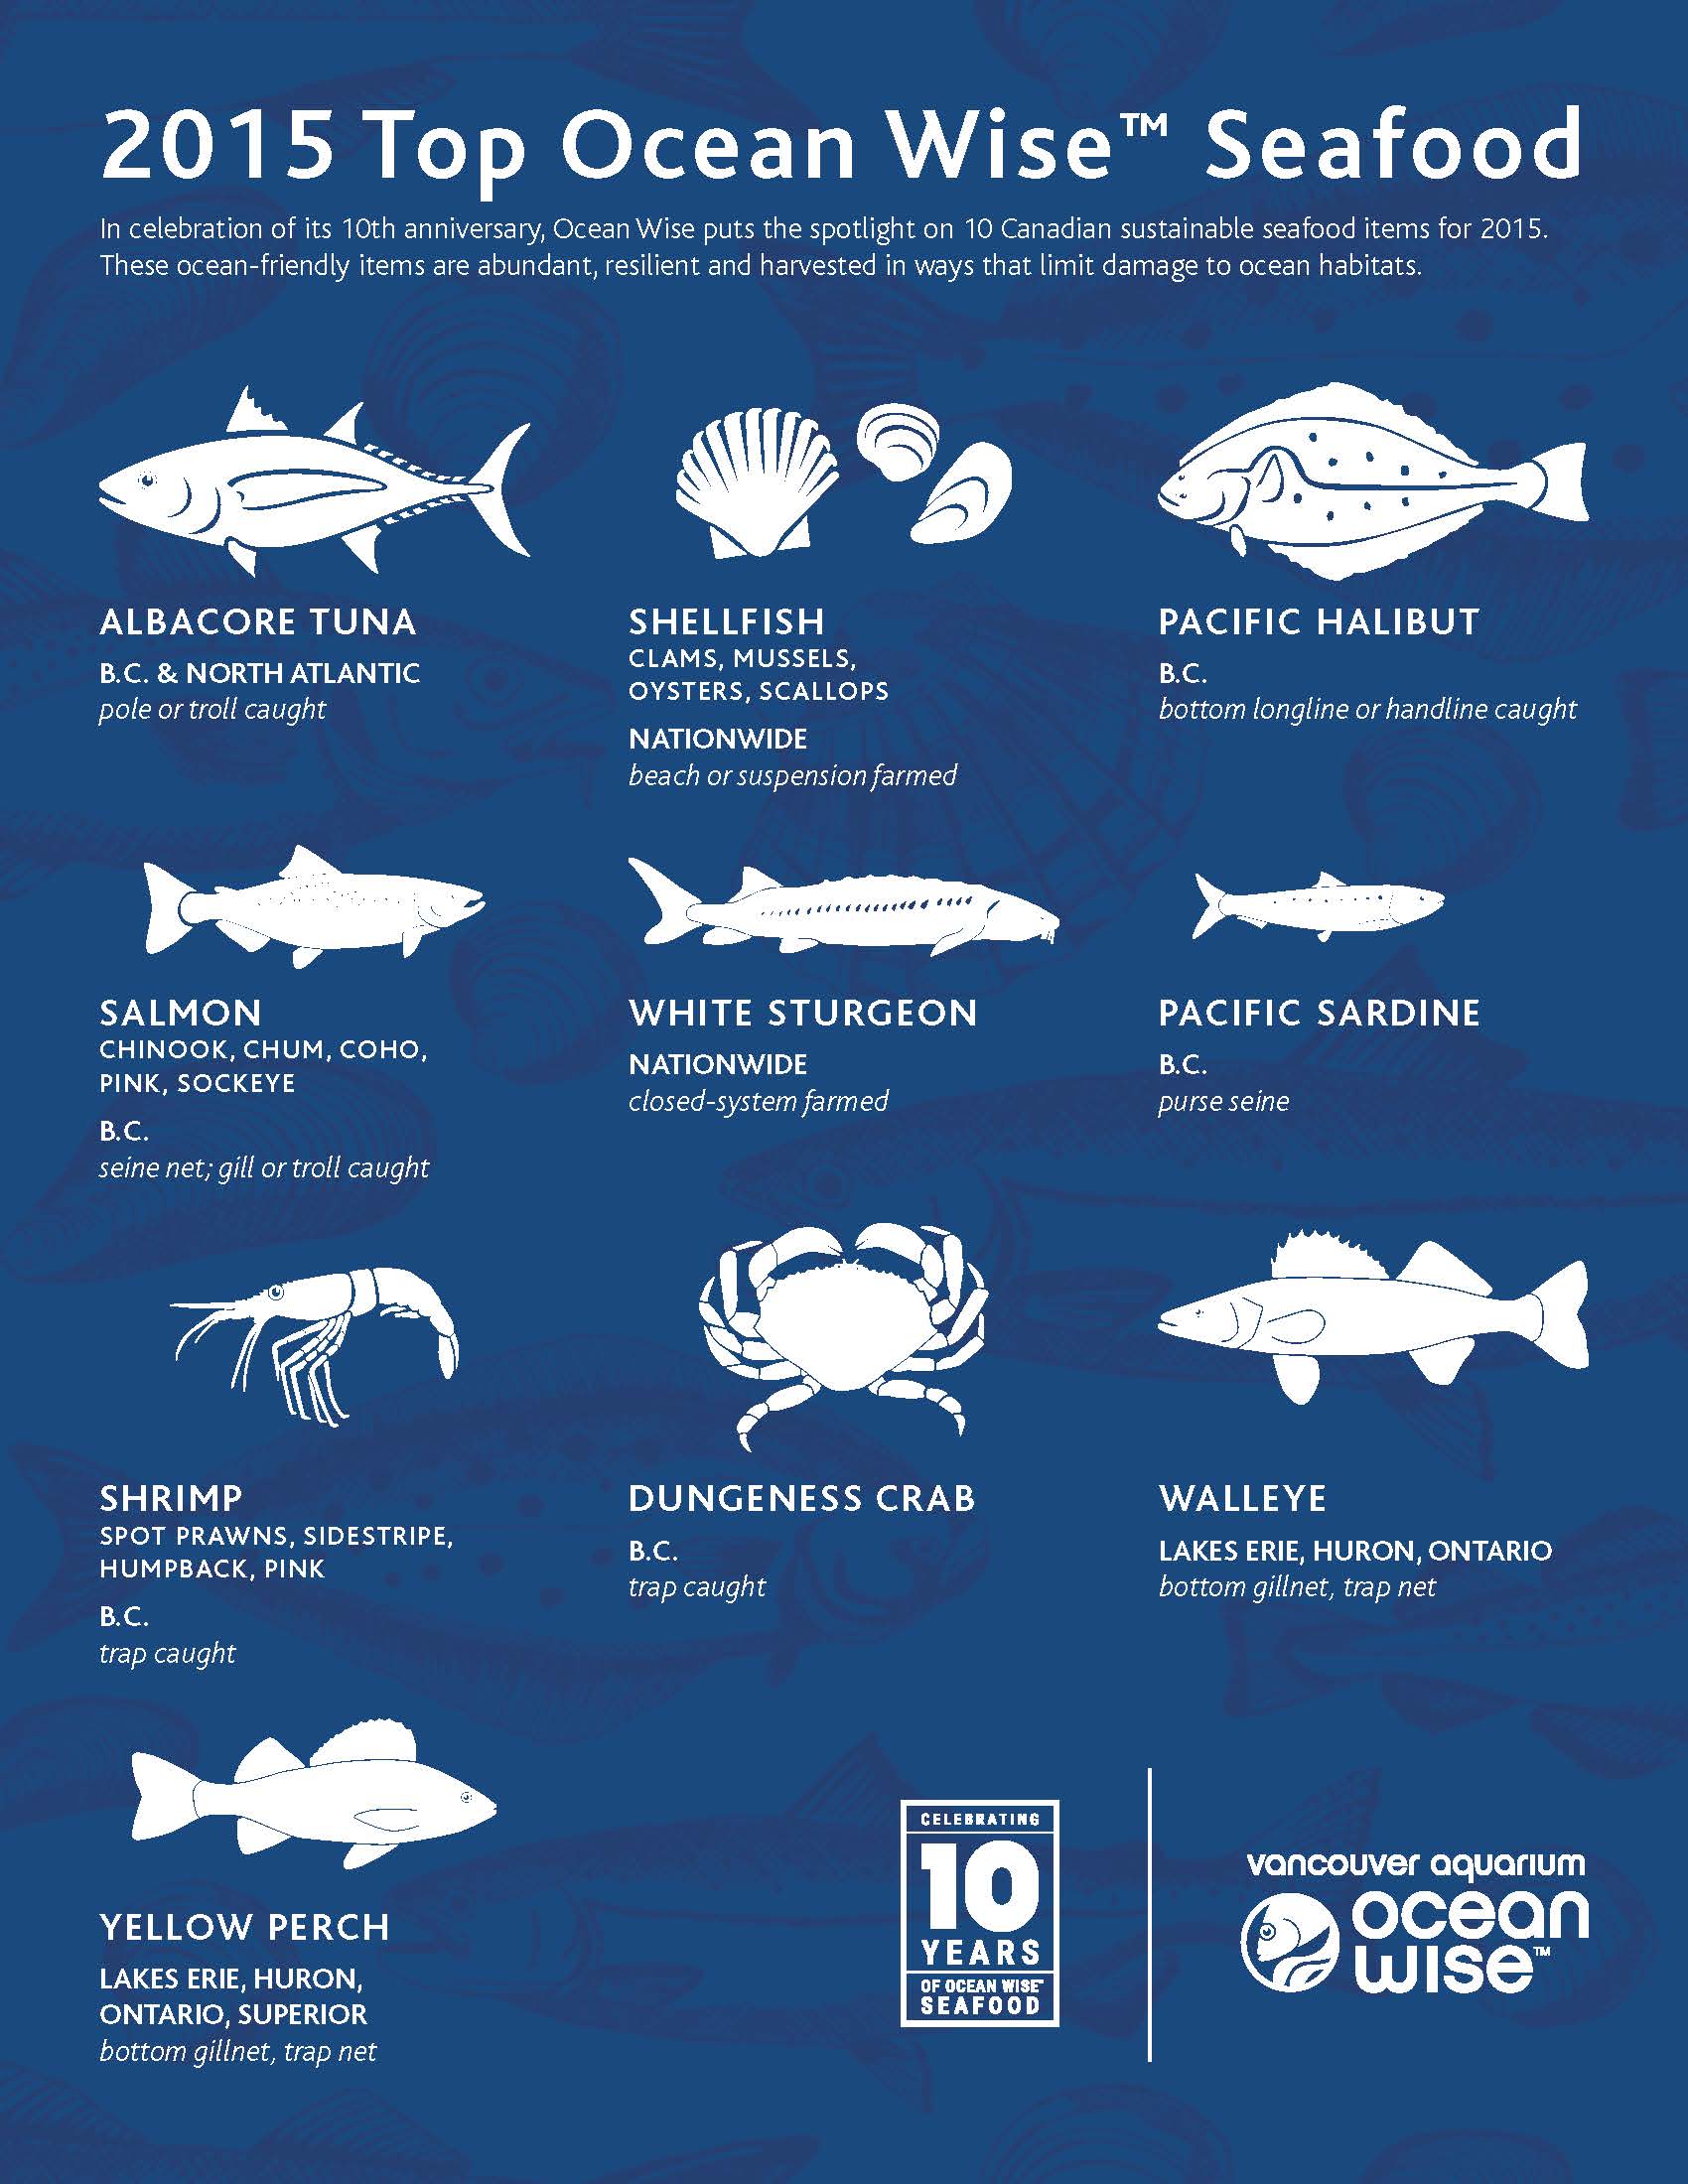 Liste des produits de la mer durables de l'Aquarium de Vancouver